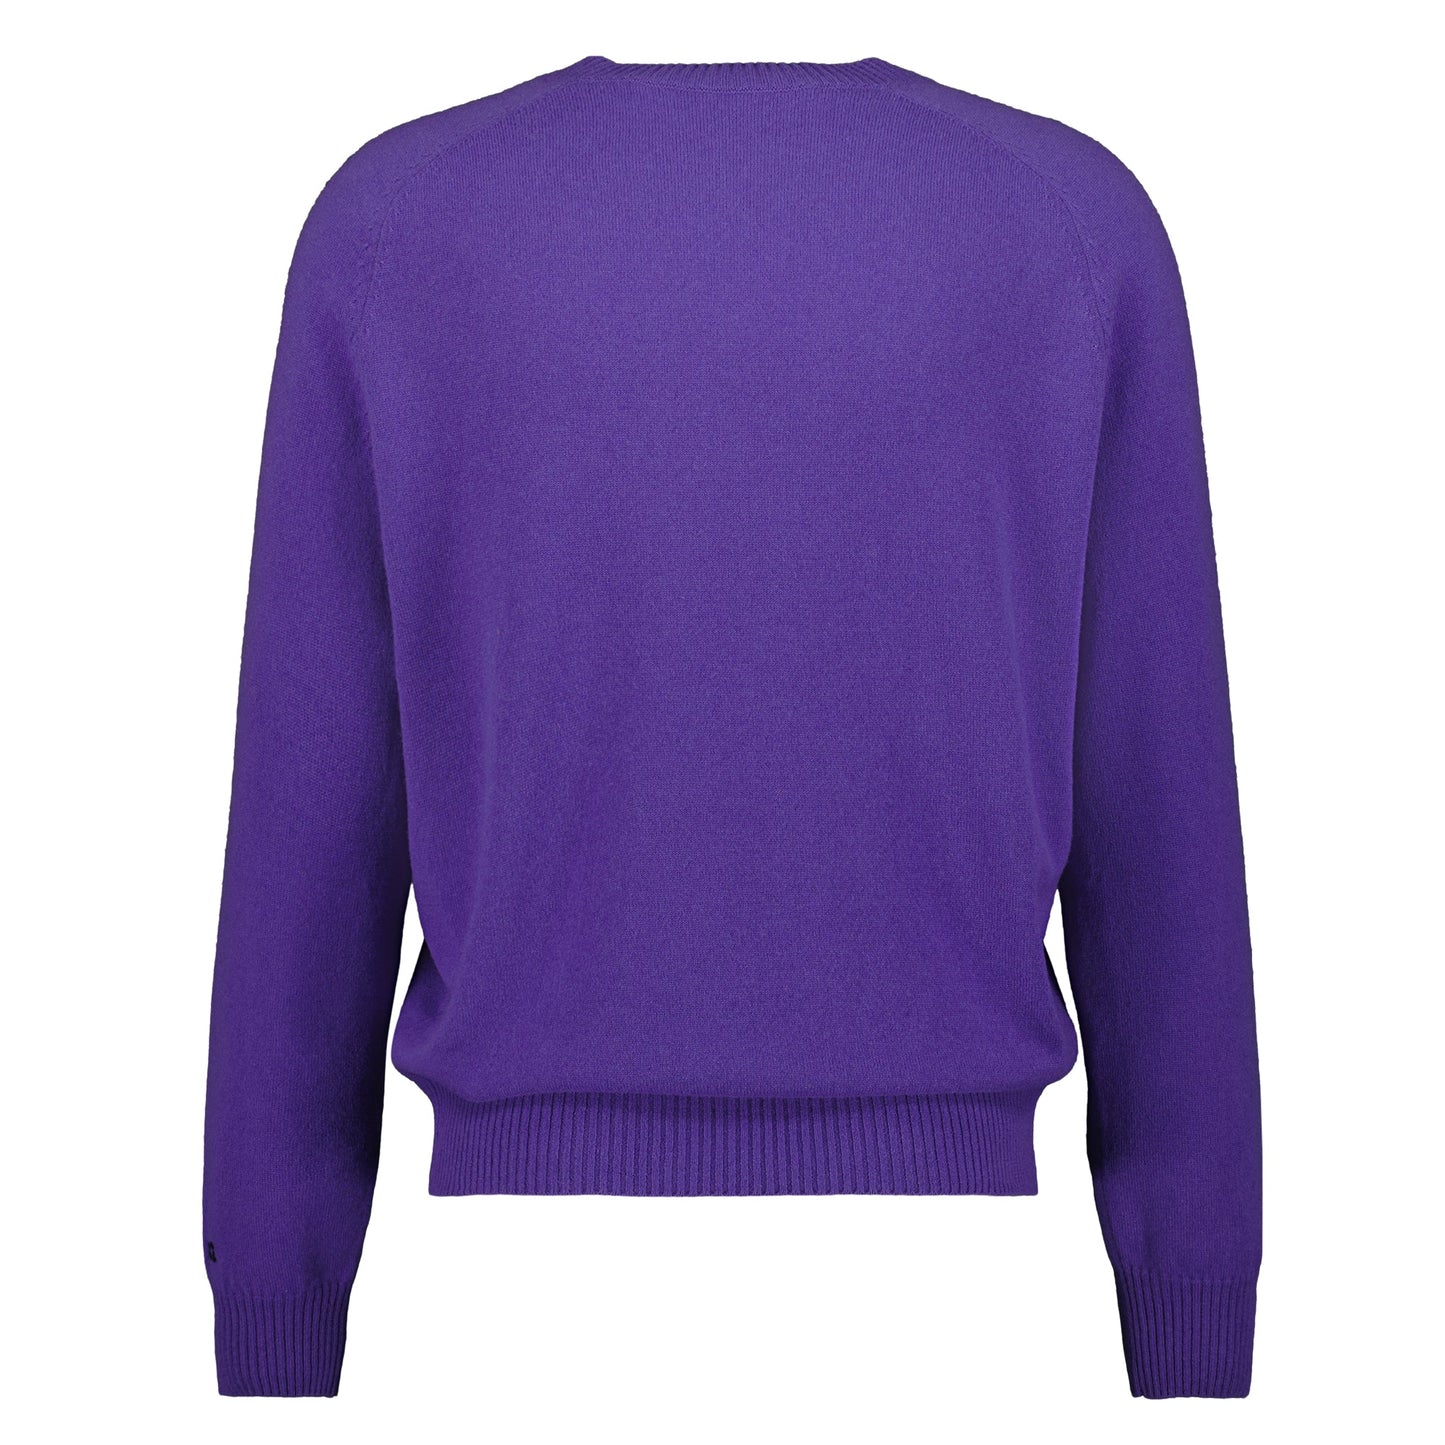 Jack Crew Neck Cashmere Sweater Bright Purple